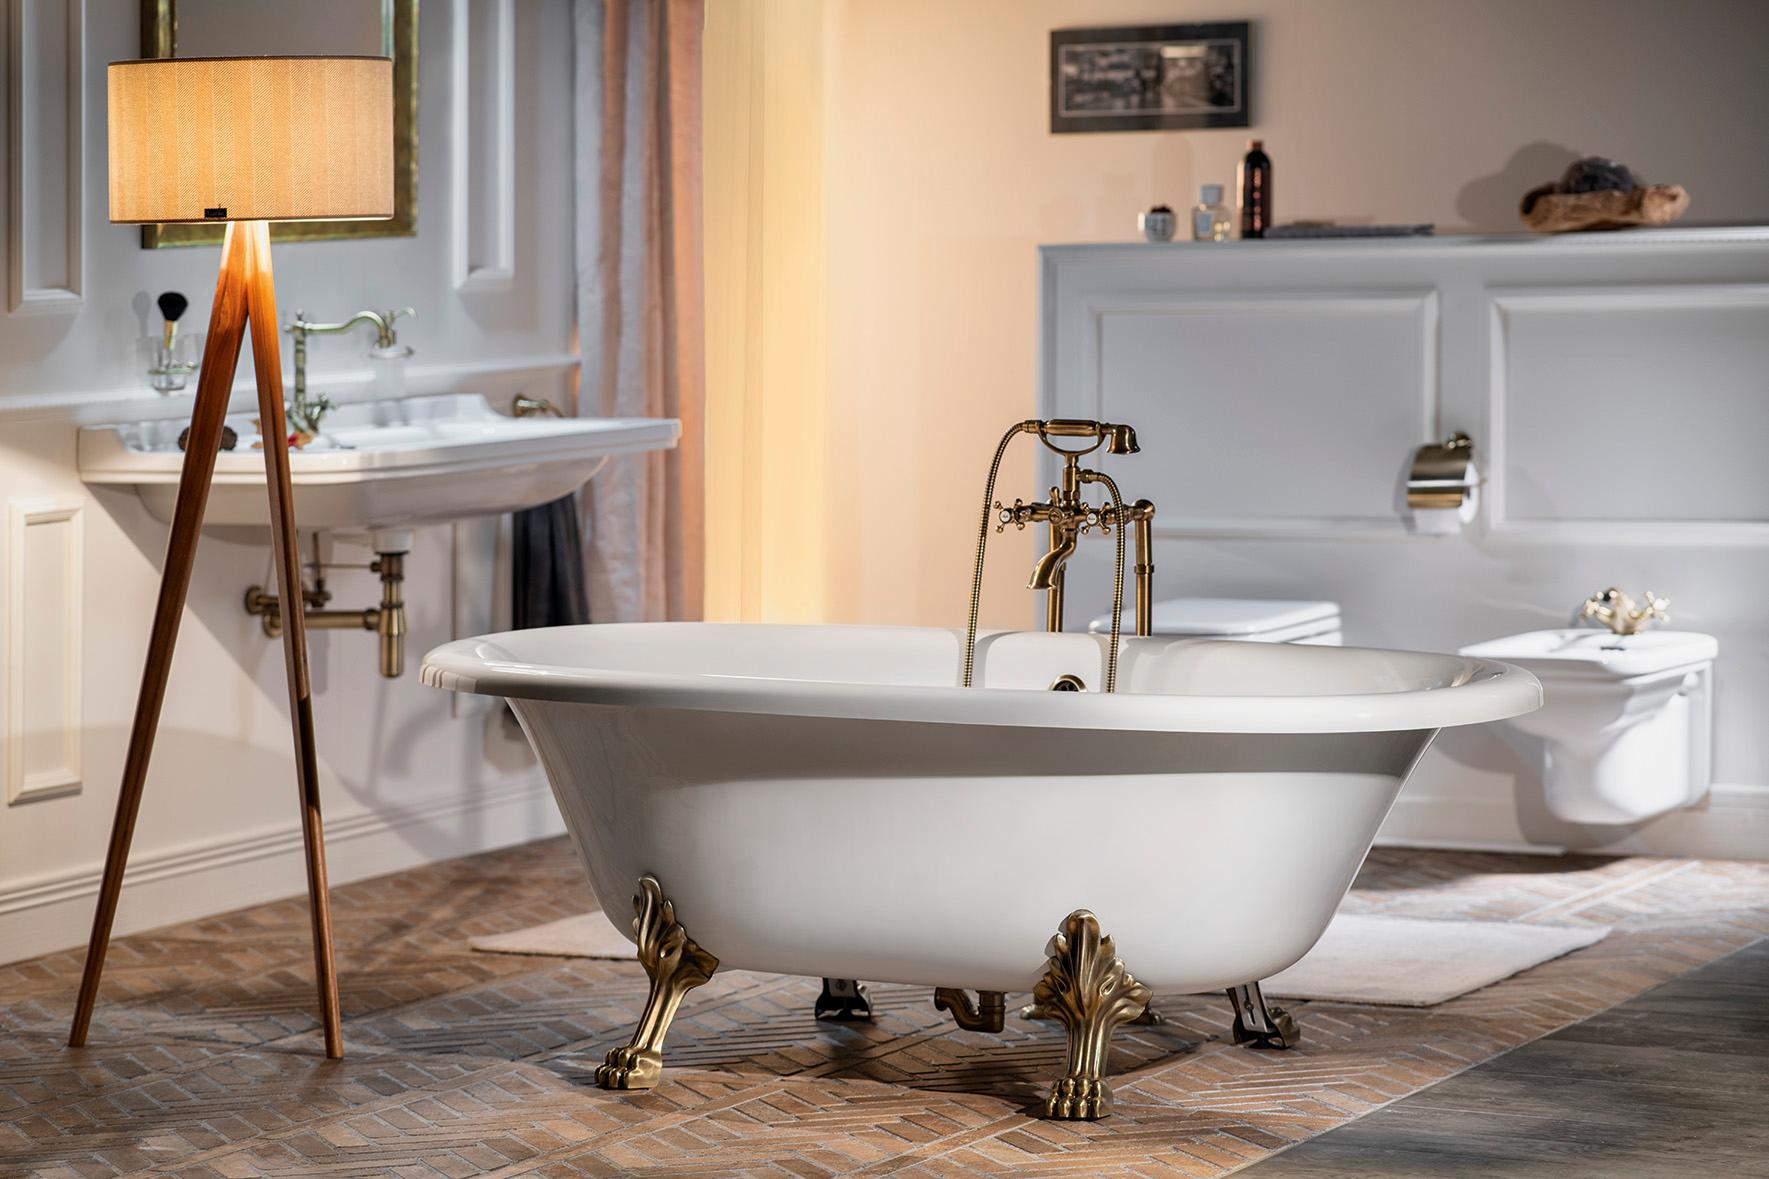 Gehoorzaam Daar informeel Hoe creëer je een vintage badkamer? | Sanitino.be/nl